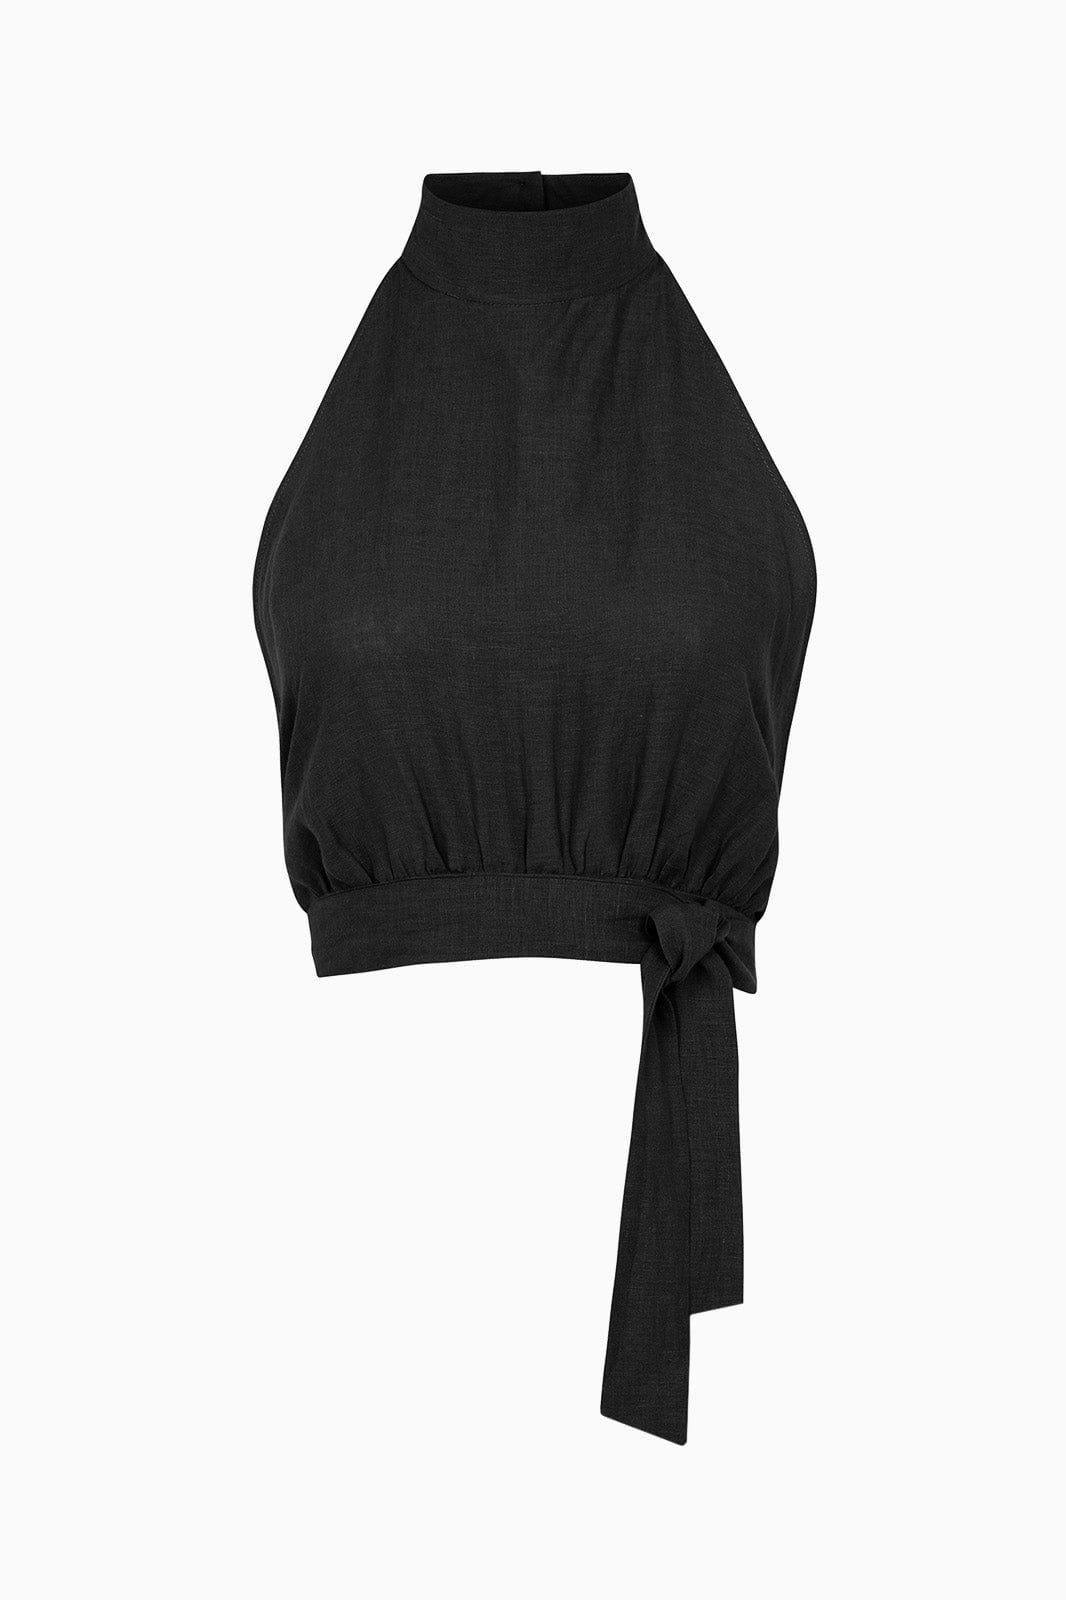 The Ronja Halterneck Top in black | arkitaip